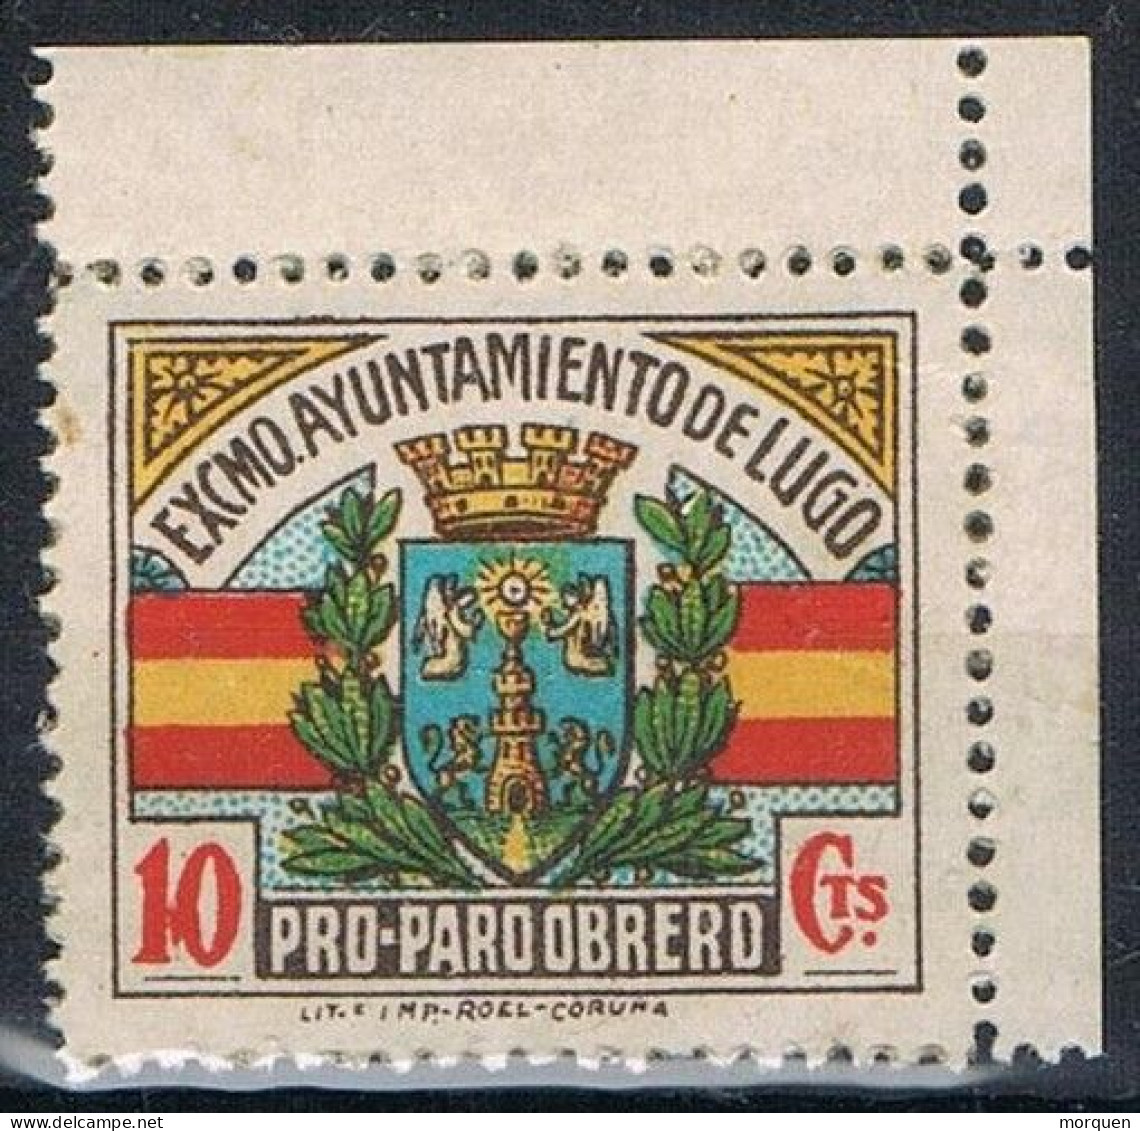 Sello Viñeta LUGO 10 Cts, Pro Paro Obrero, Guerra Civil, Ayuntamiento ** - Spanish Civil War Labels